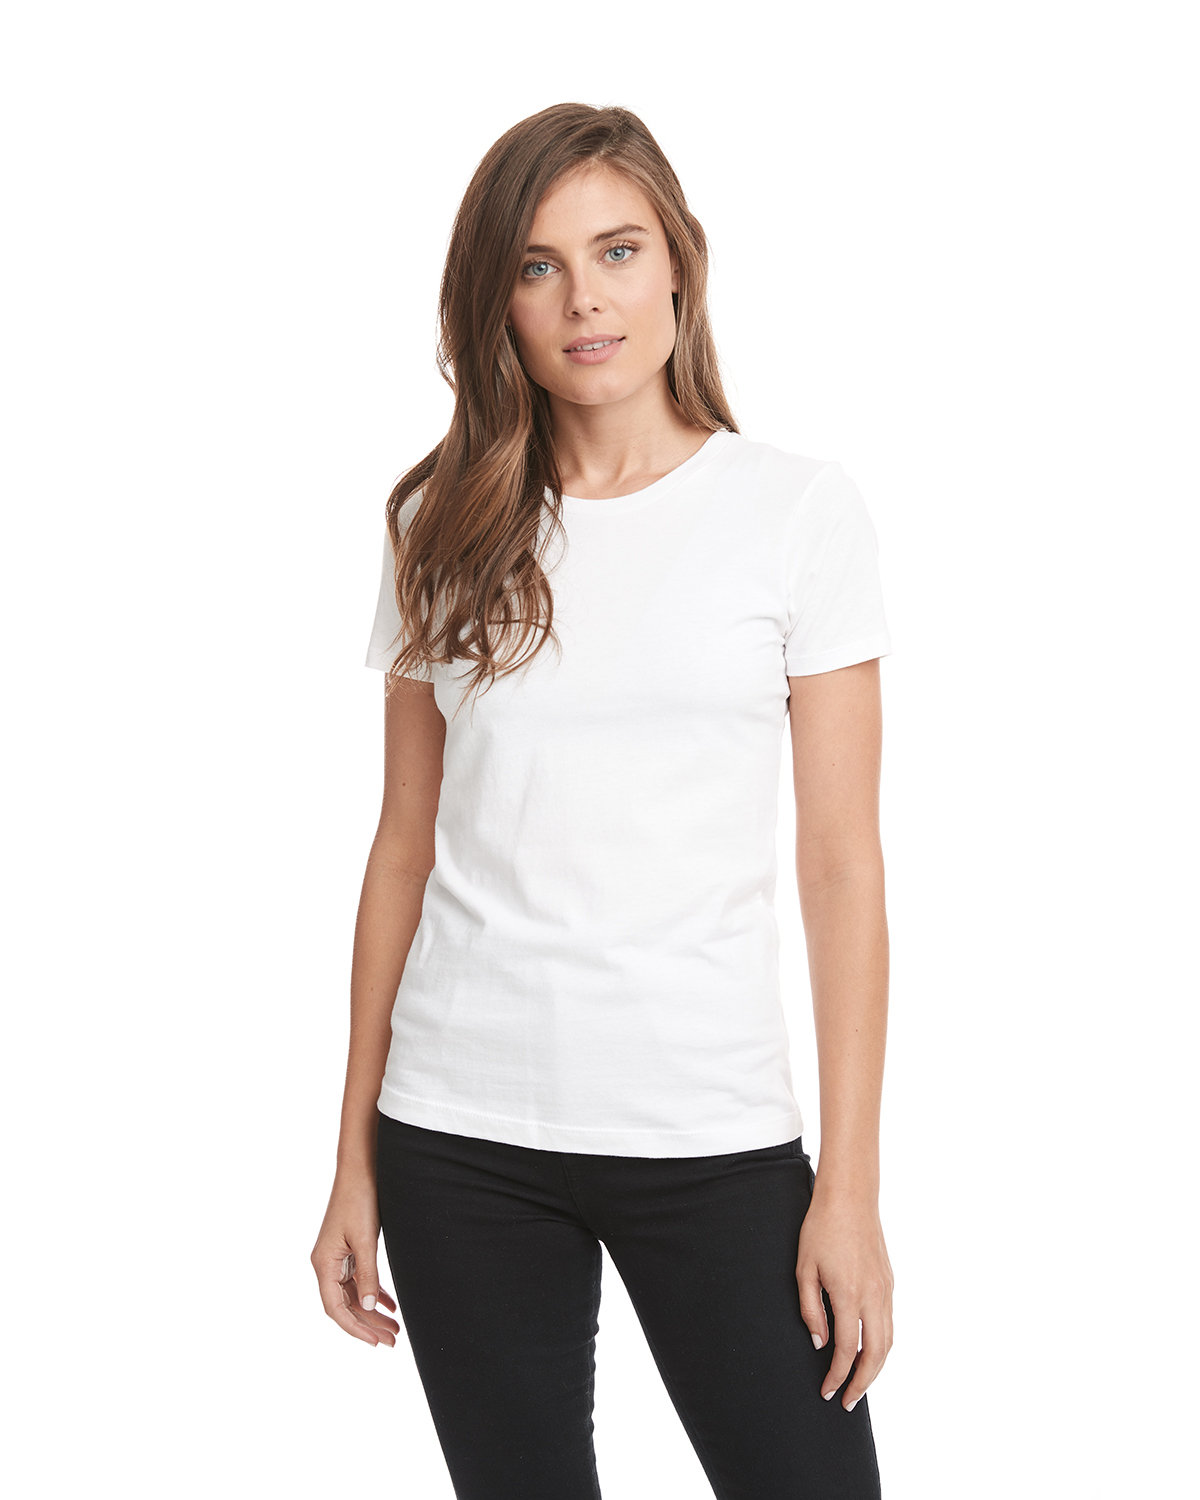 Pntutb Womens Clearance,Women's Fashion Print T-Shirt Mid-Length 3